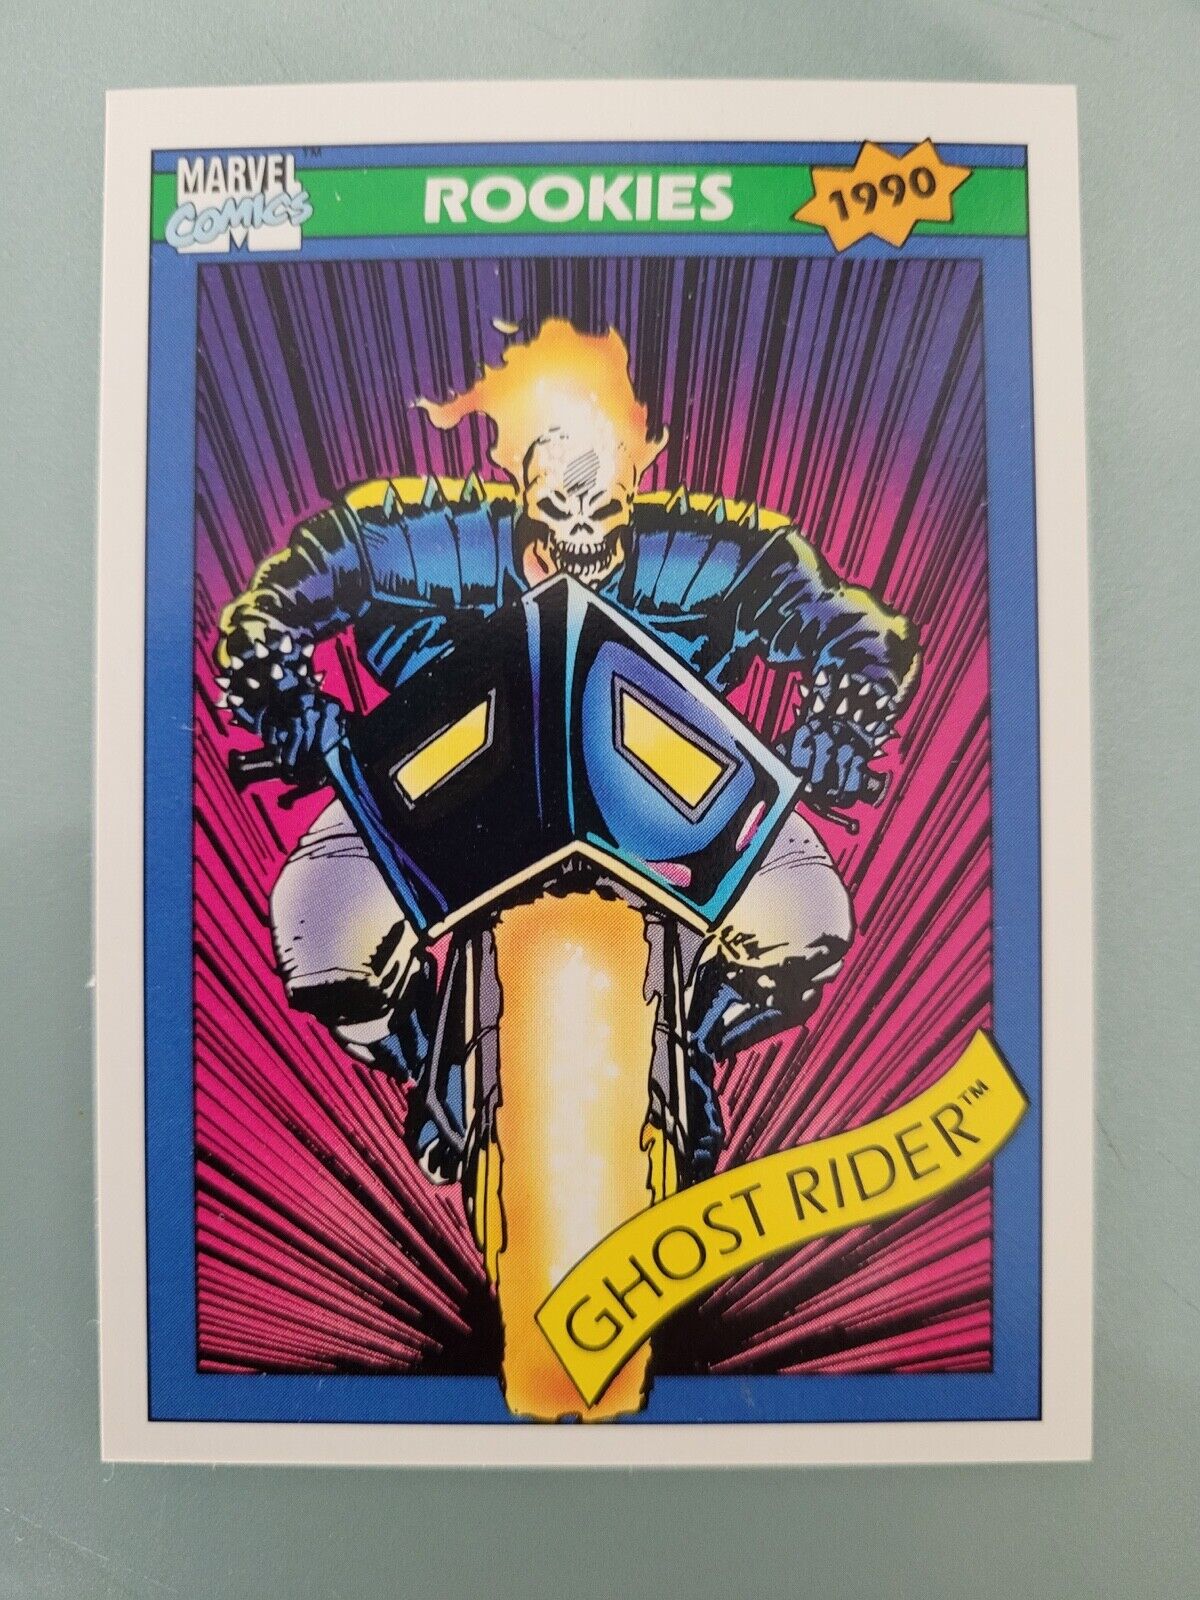 MARVEL SUPER-HEROES SERIES 1 1990 GHOST RIDER TRADING CARD #82 ROOKIES 